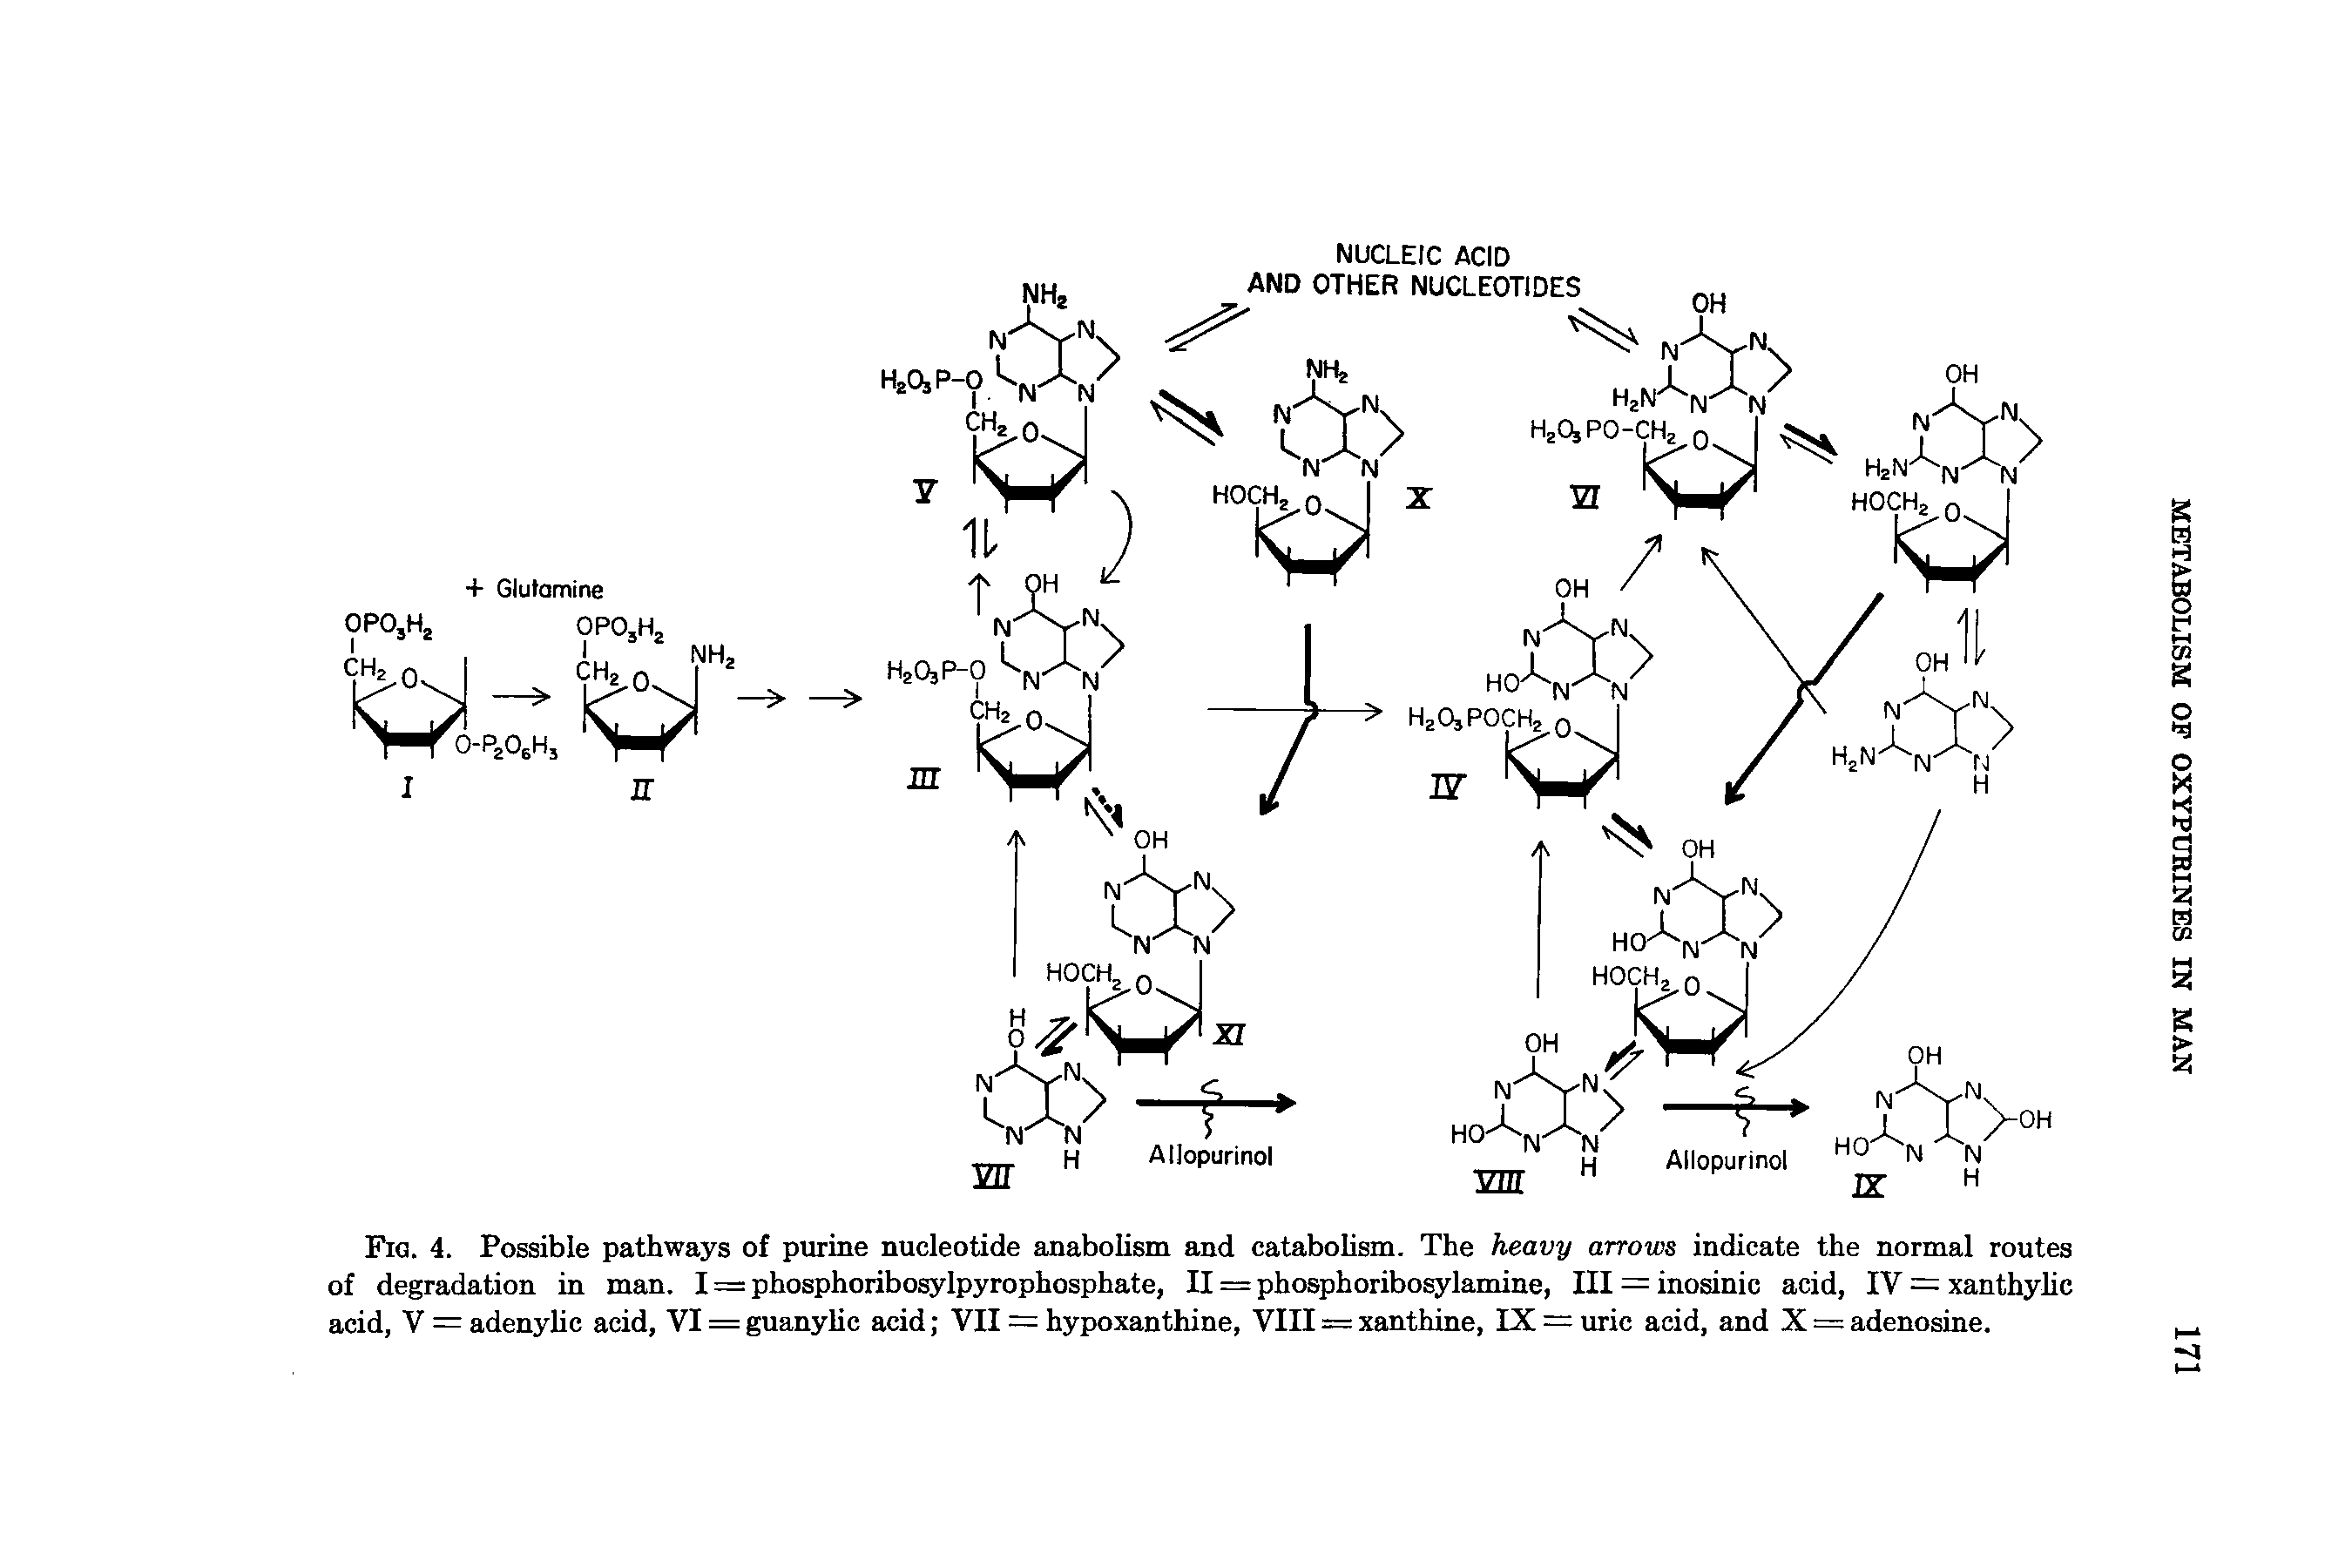 Fig. 4. Possible pathways of purine nucleotide anabolism and catabolism. The heavy arrows indicate the normal routes of degradation in man. I = phosphoribosylpyrophosphate, II = phosphoribosylamine, III = inosinic acid, IV = xanthylic acid, V = adenyhc acid, VI = guanyhc acid VII = hypoxanthine, VIII = xanthine, IX — uric acid, and X = adenosine.